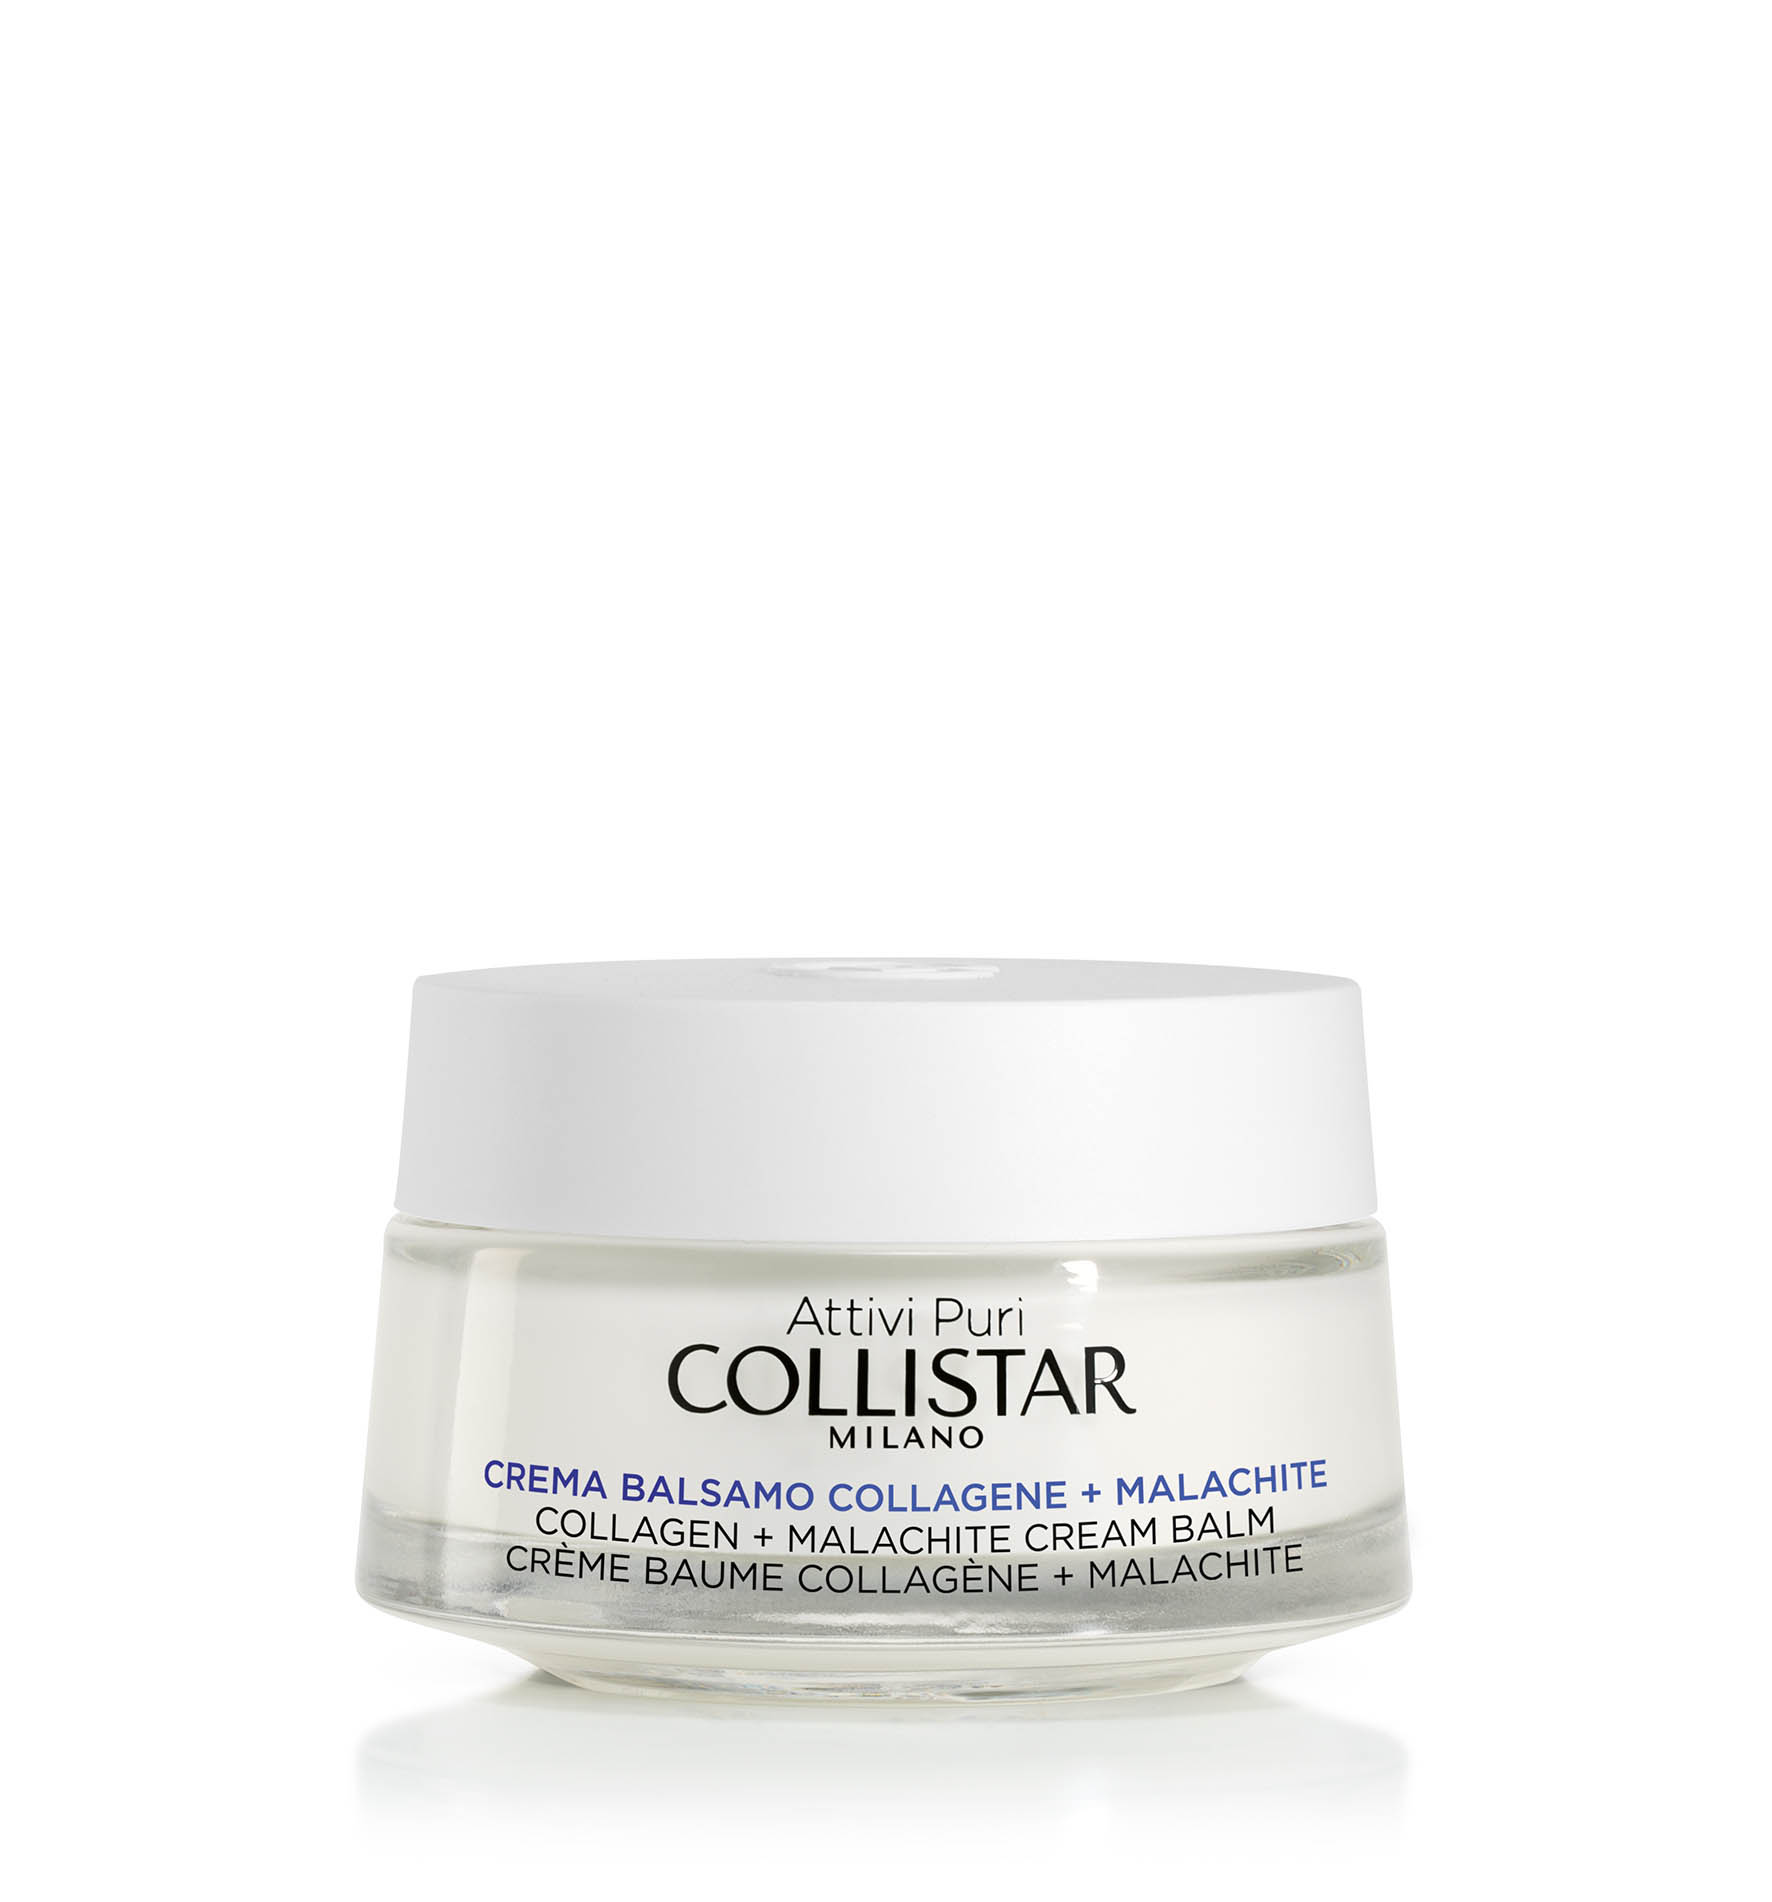 COLLAGEN + MALACHITE CREAM BALM - Sensitive skin | Collistar - Shop Online Ufficiale